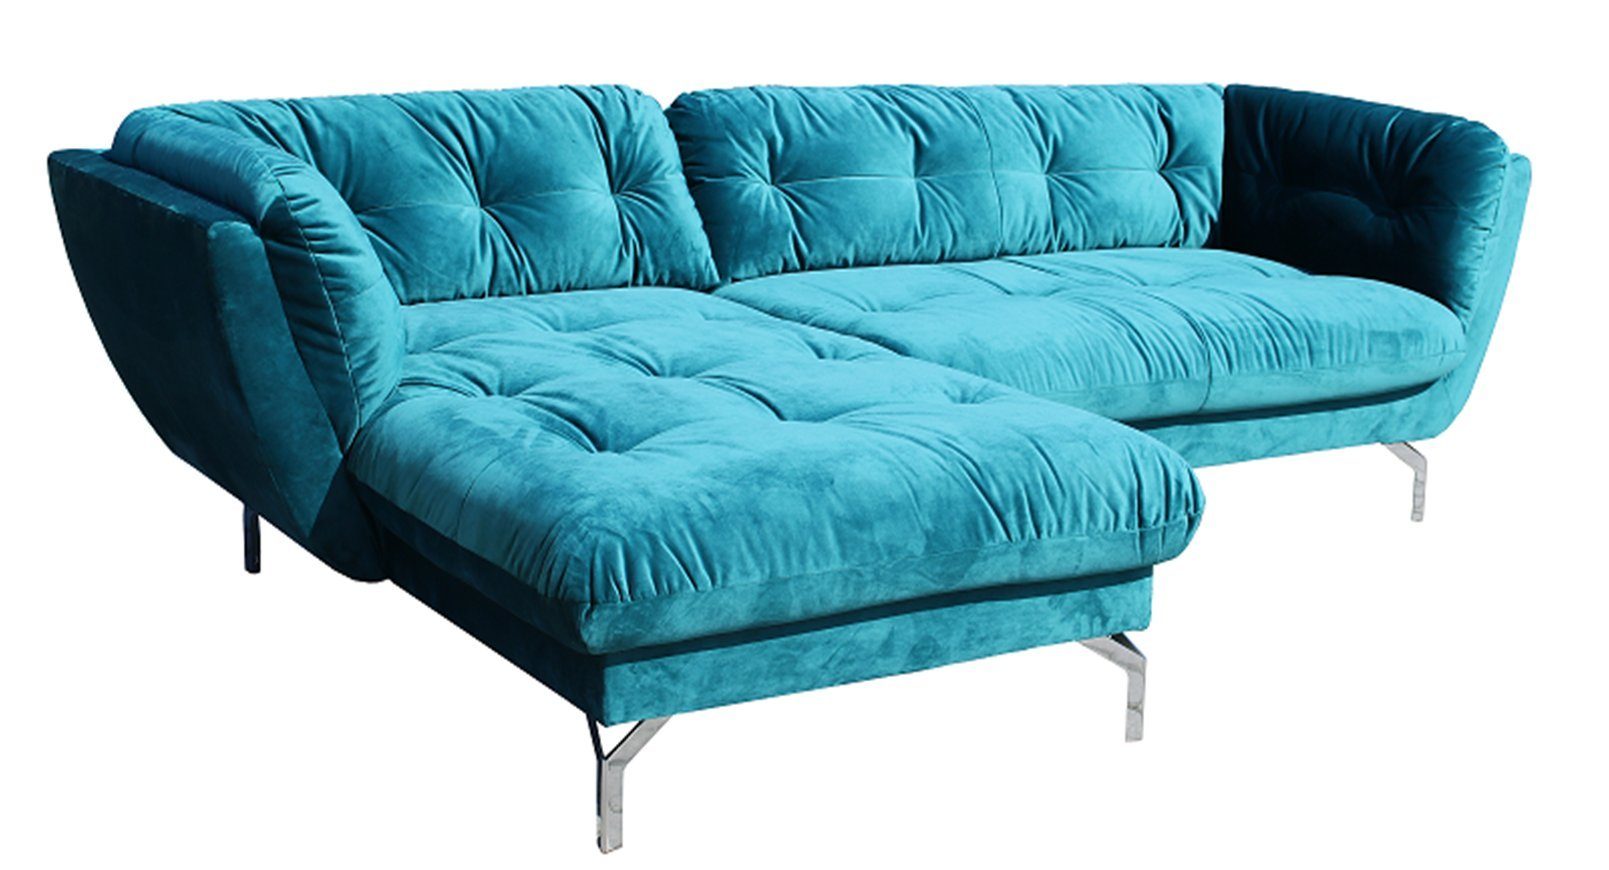 JVmoebel Sofa Ecksofa L Form Sofa Couch Design Couchen Polster Textil Neu, Made in Europe